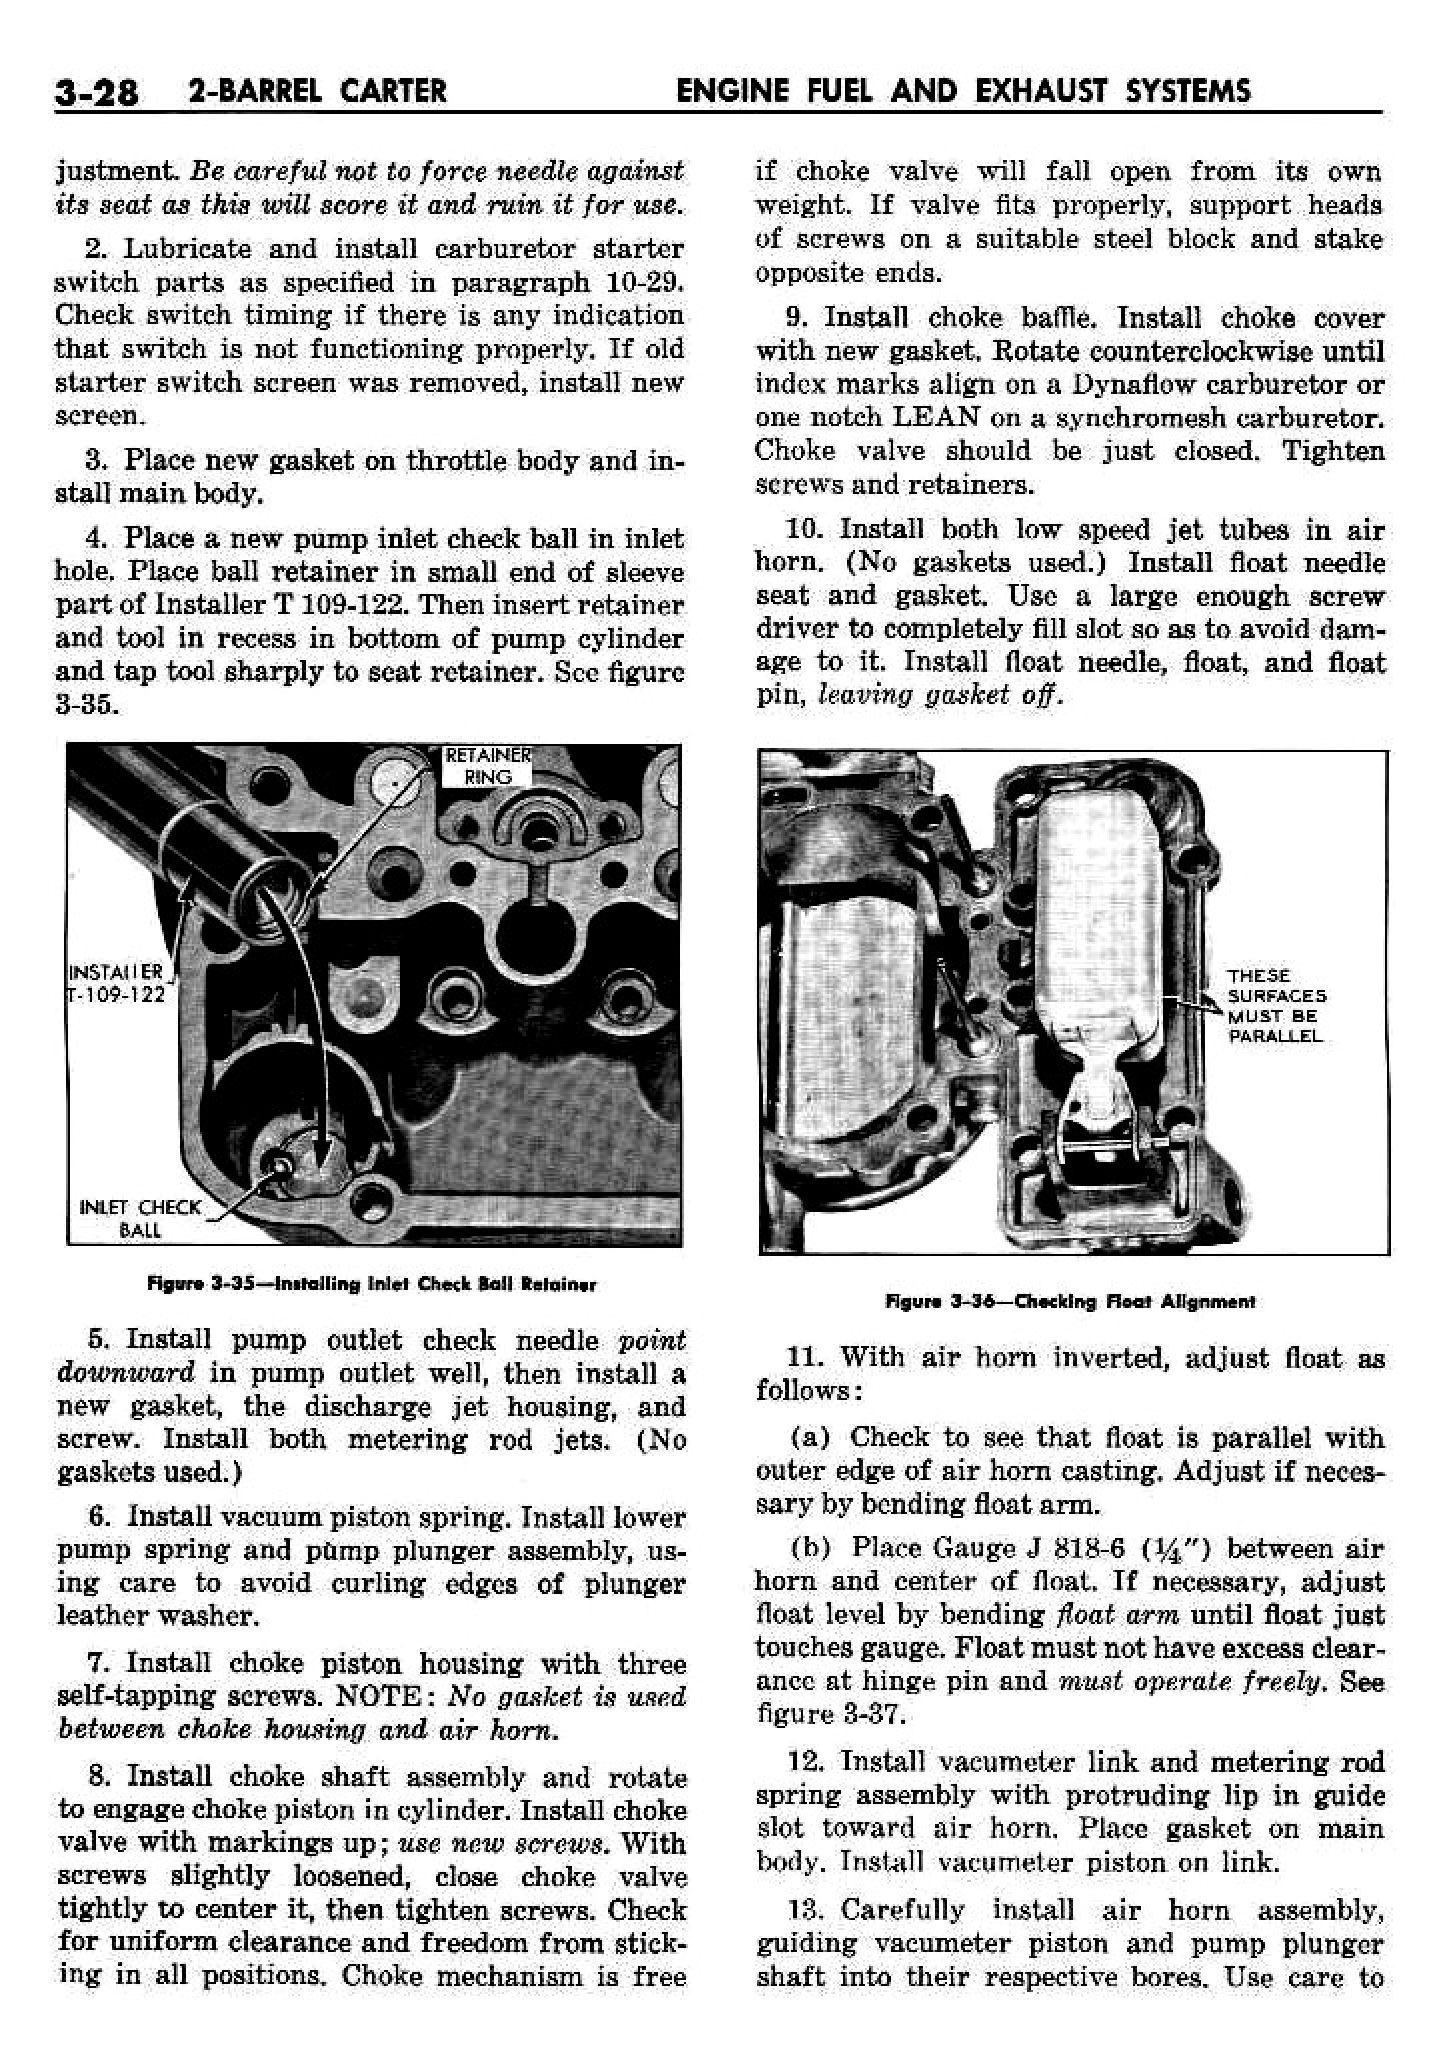 n_04 1958 Buick Shop Manual - Engine Fuel & Exhaust_28.jpg